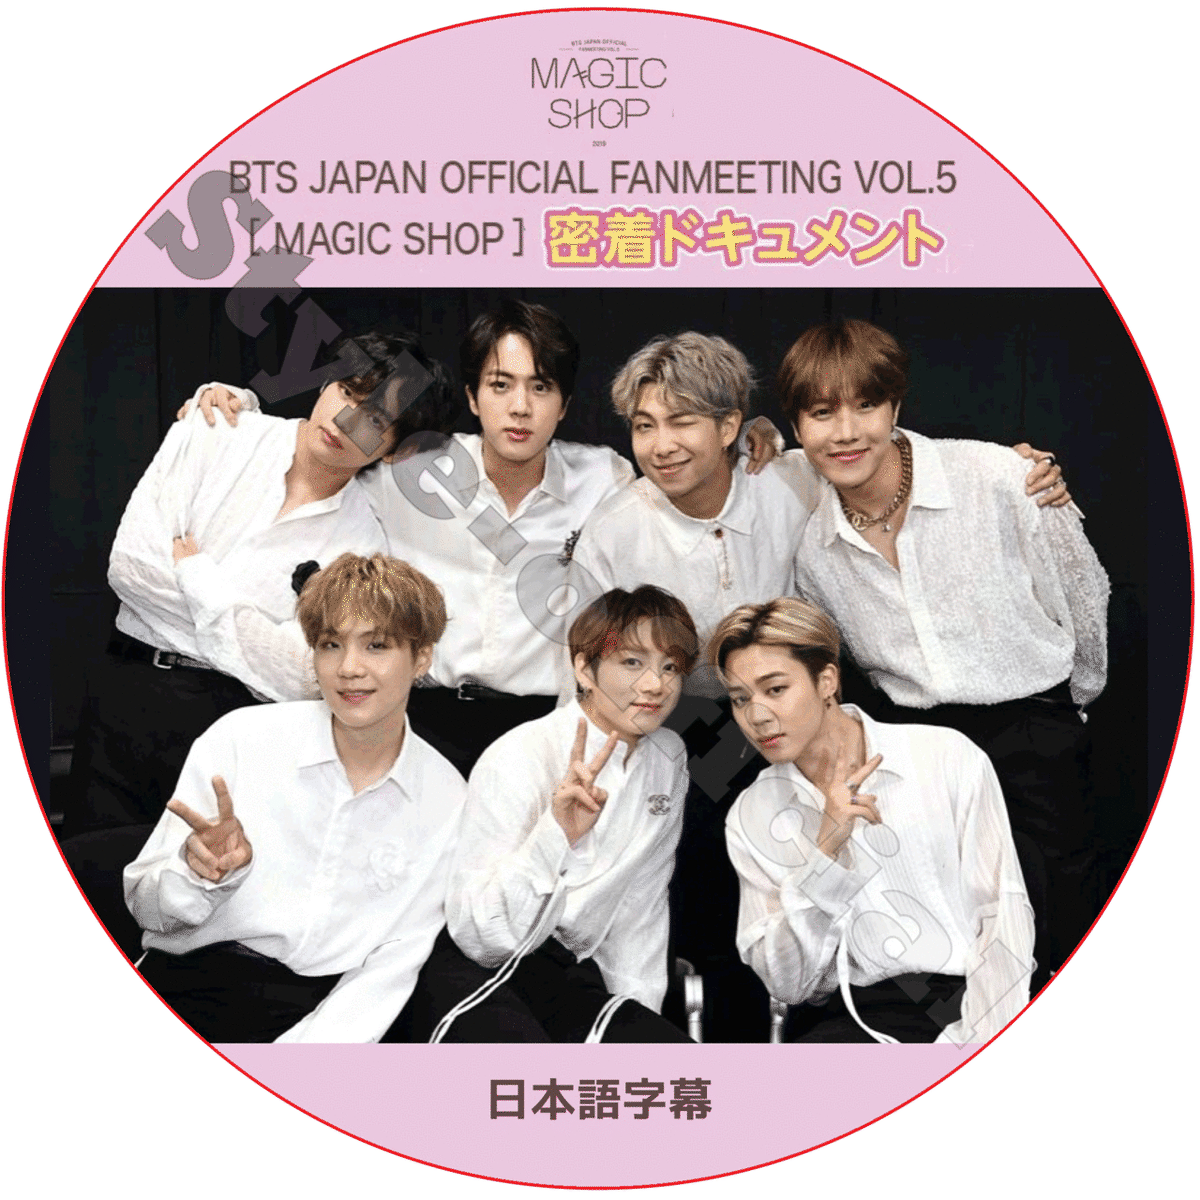 BTS DVD MAGIC SHOP ペンミ 日本 FANMEETING - K-POP/アジア